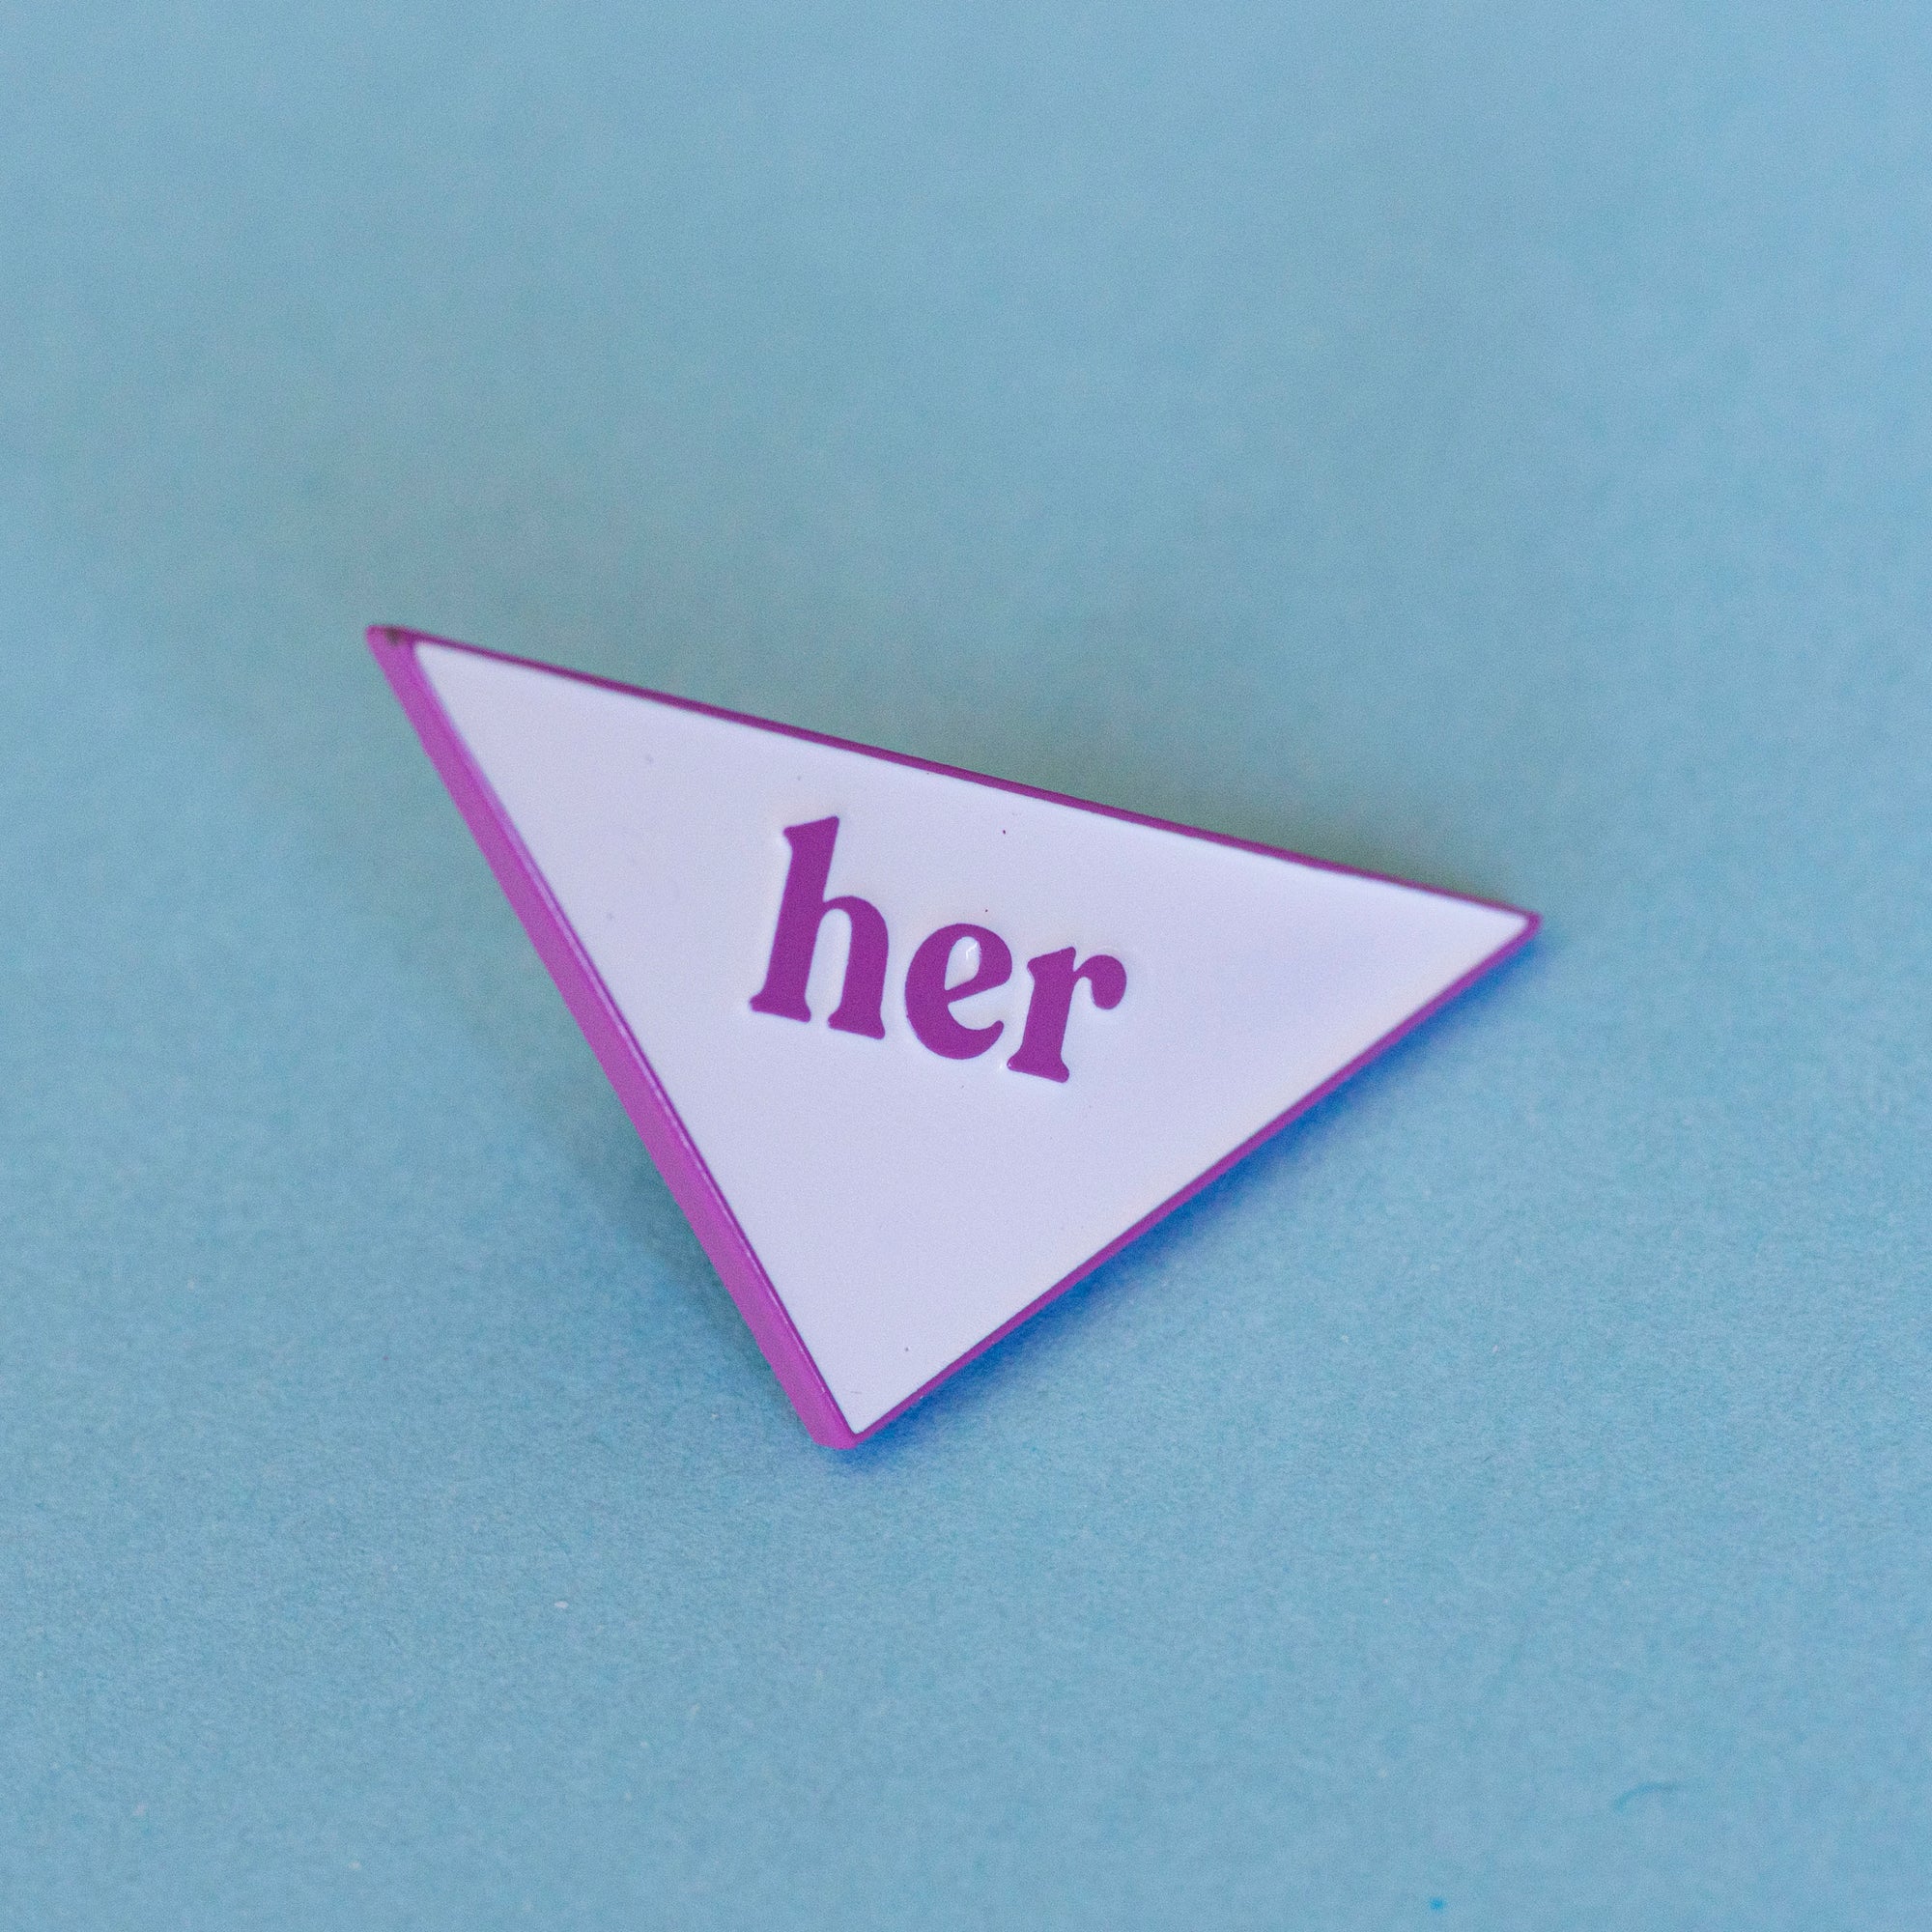 Her - Pronouns Combo Enamel Pins - Pink - Part 2